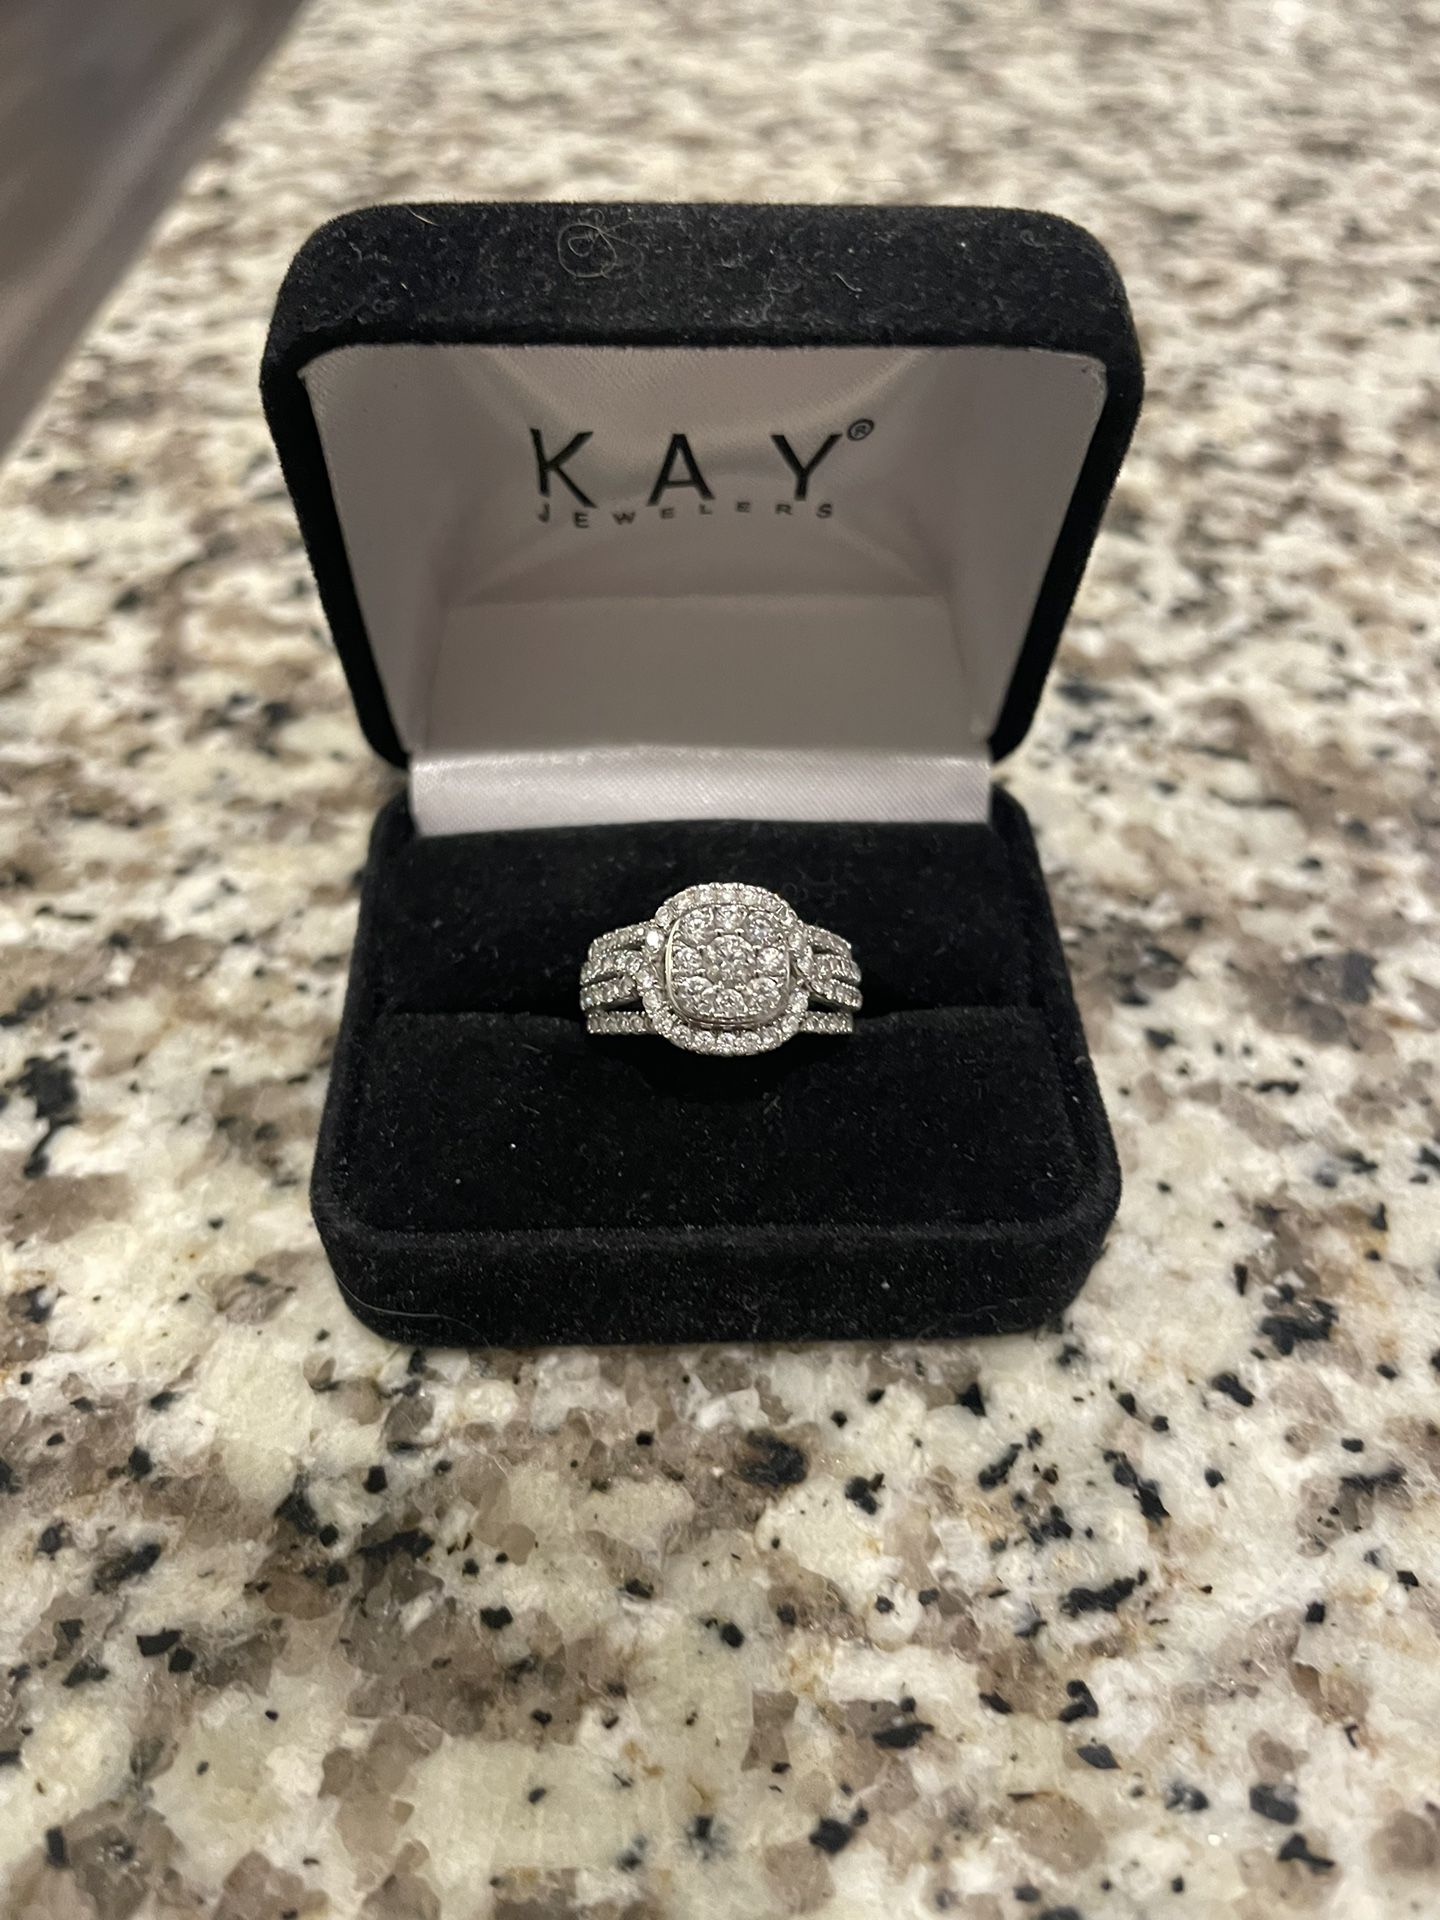  Diamond Engagement Ring